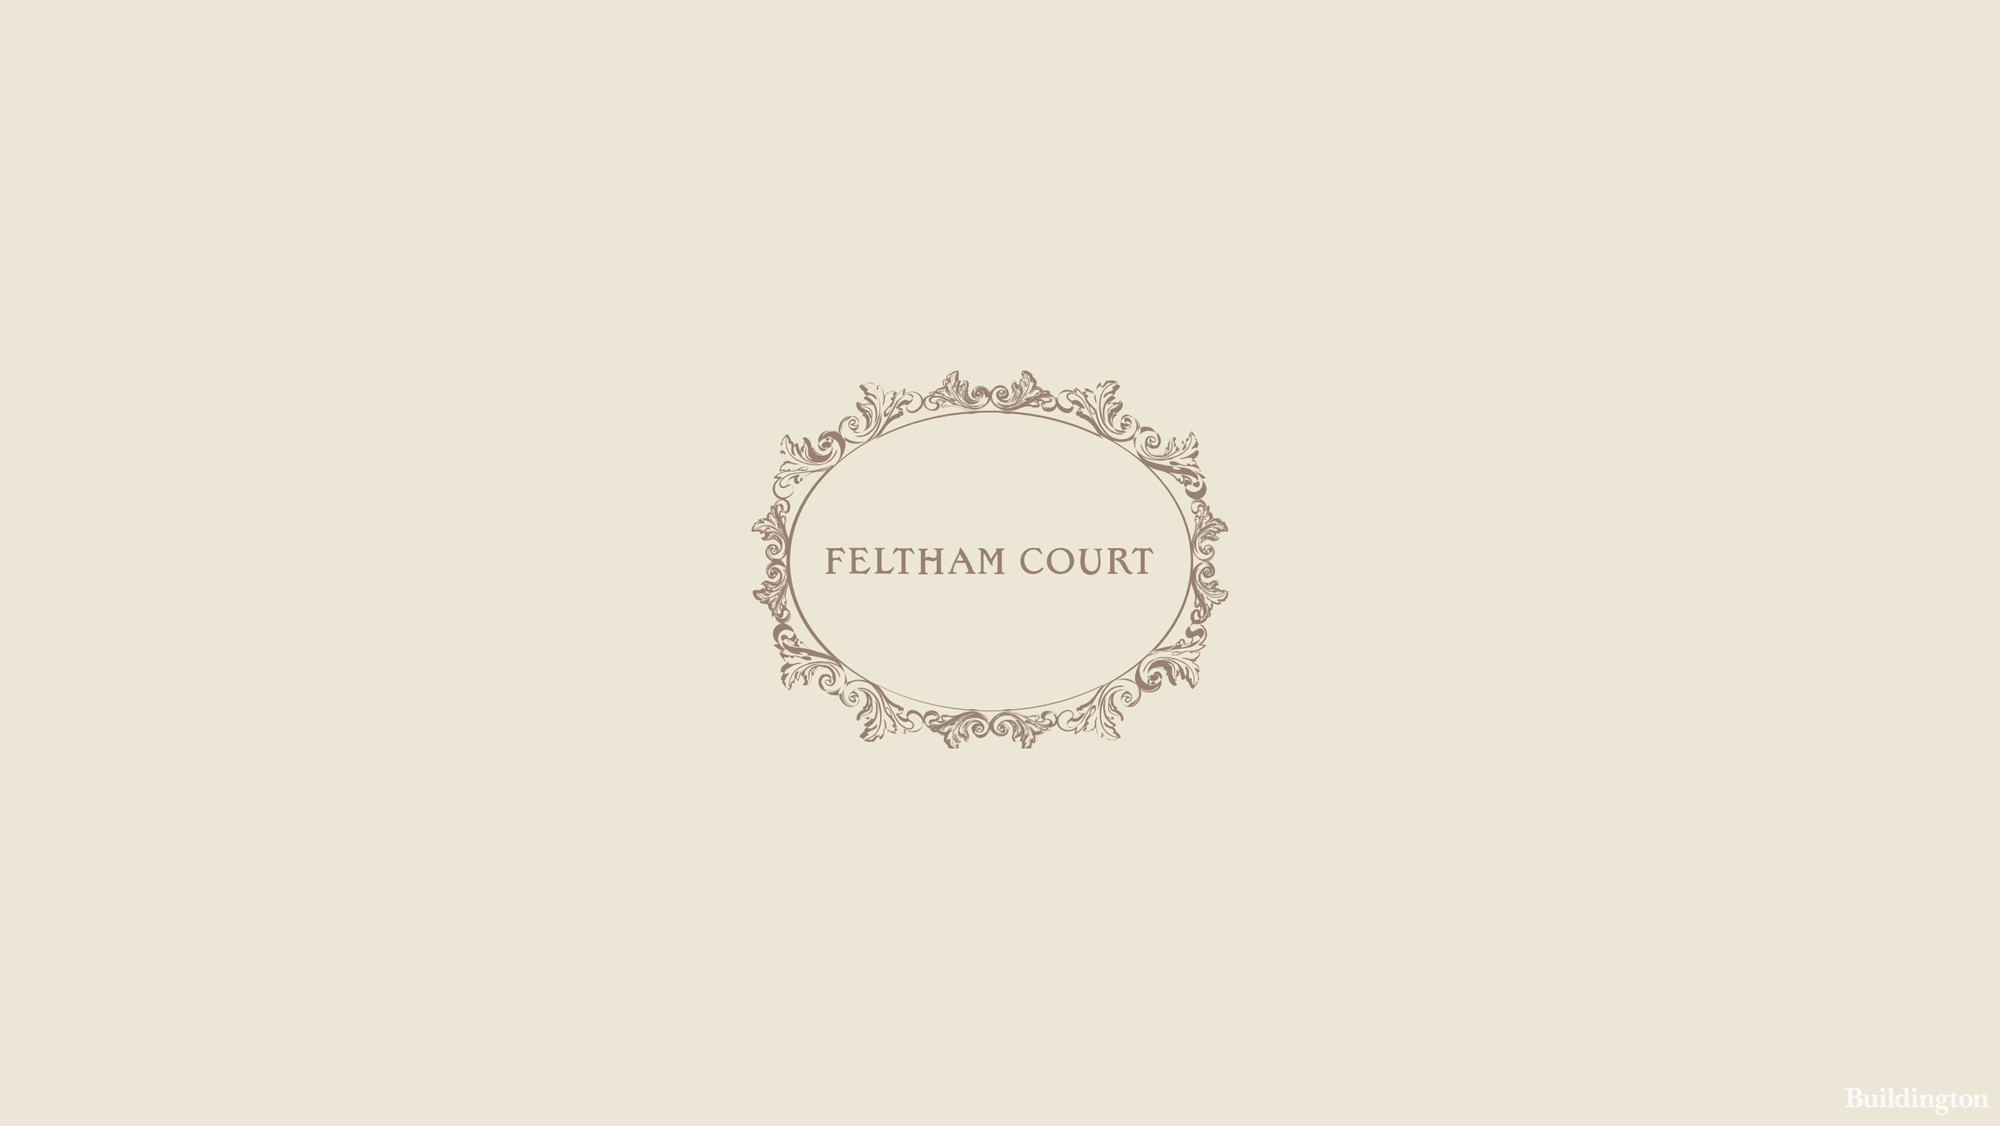 Feltham Court development logo